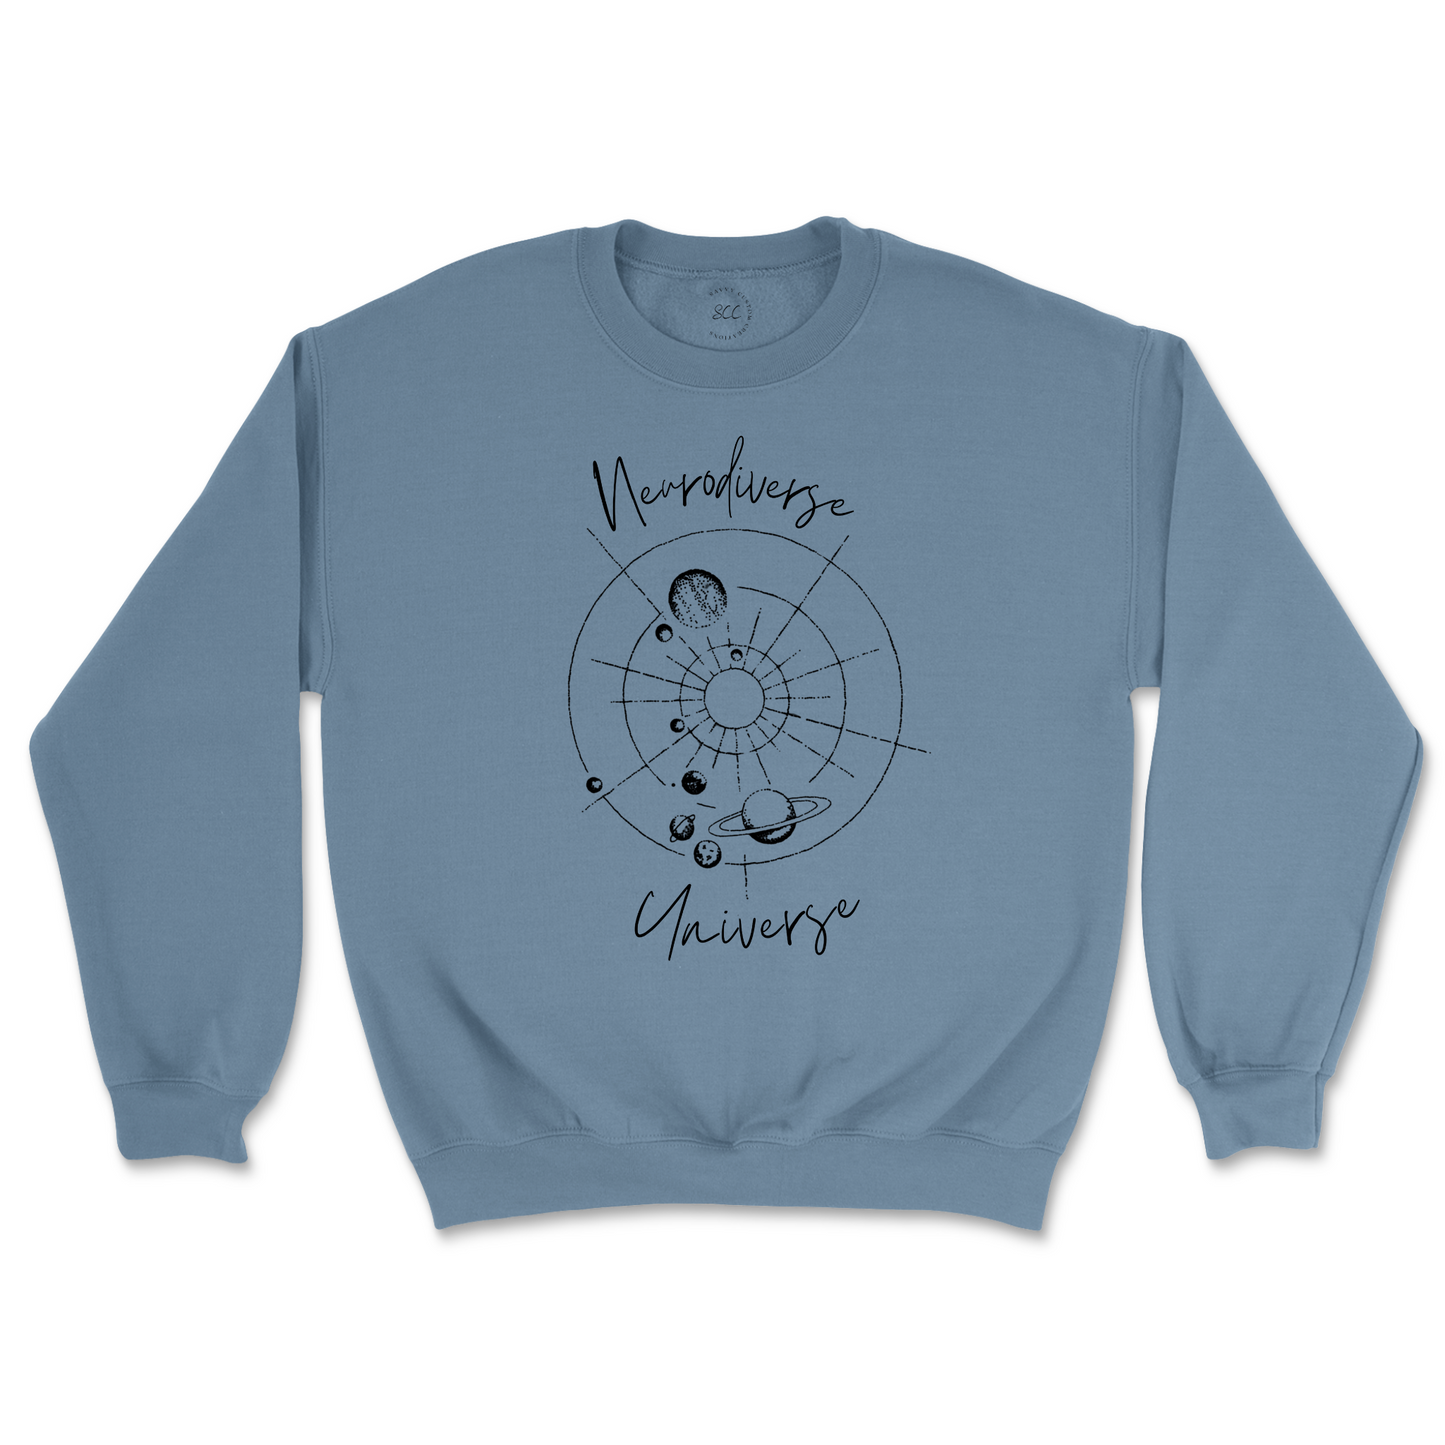 Neurodiverse Universe - Unisex Sweatshirt